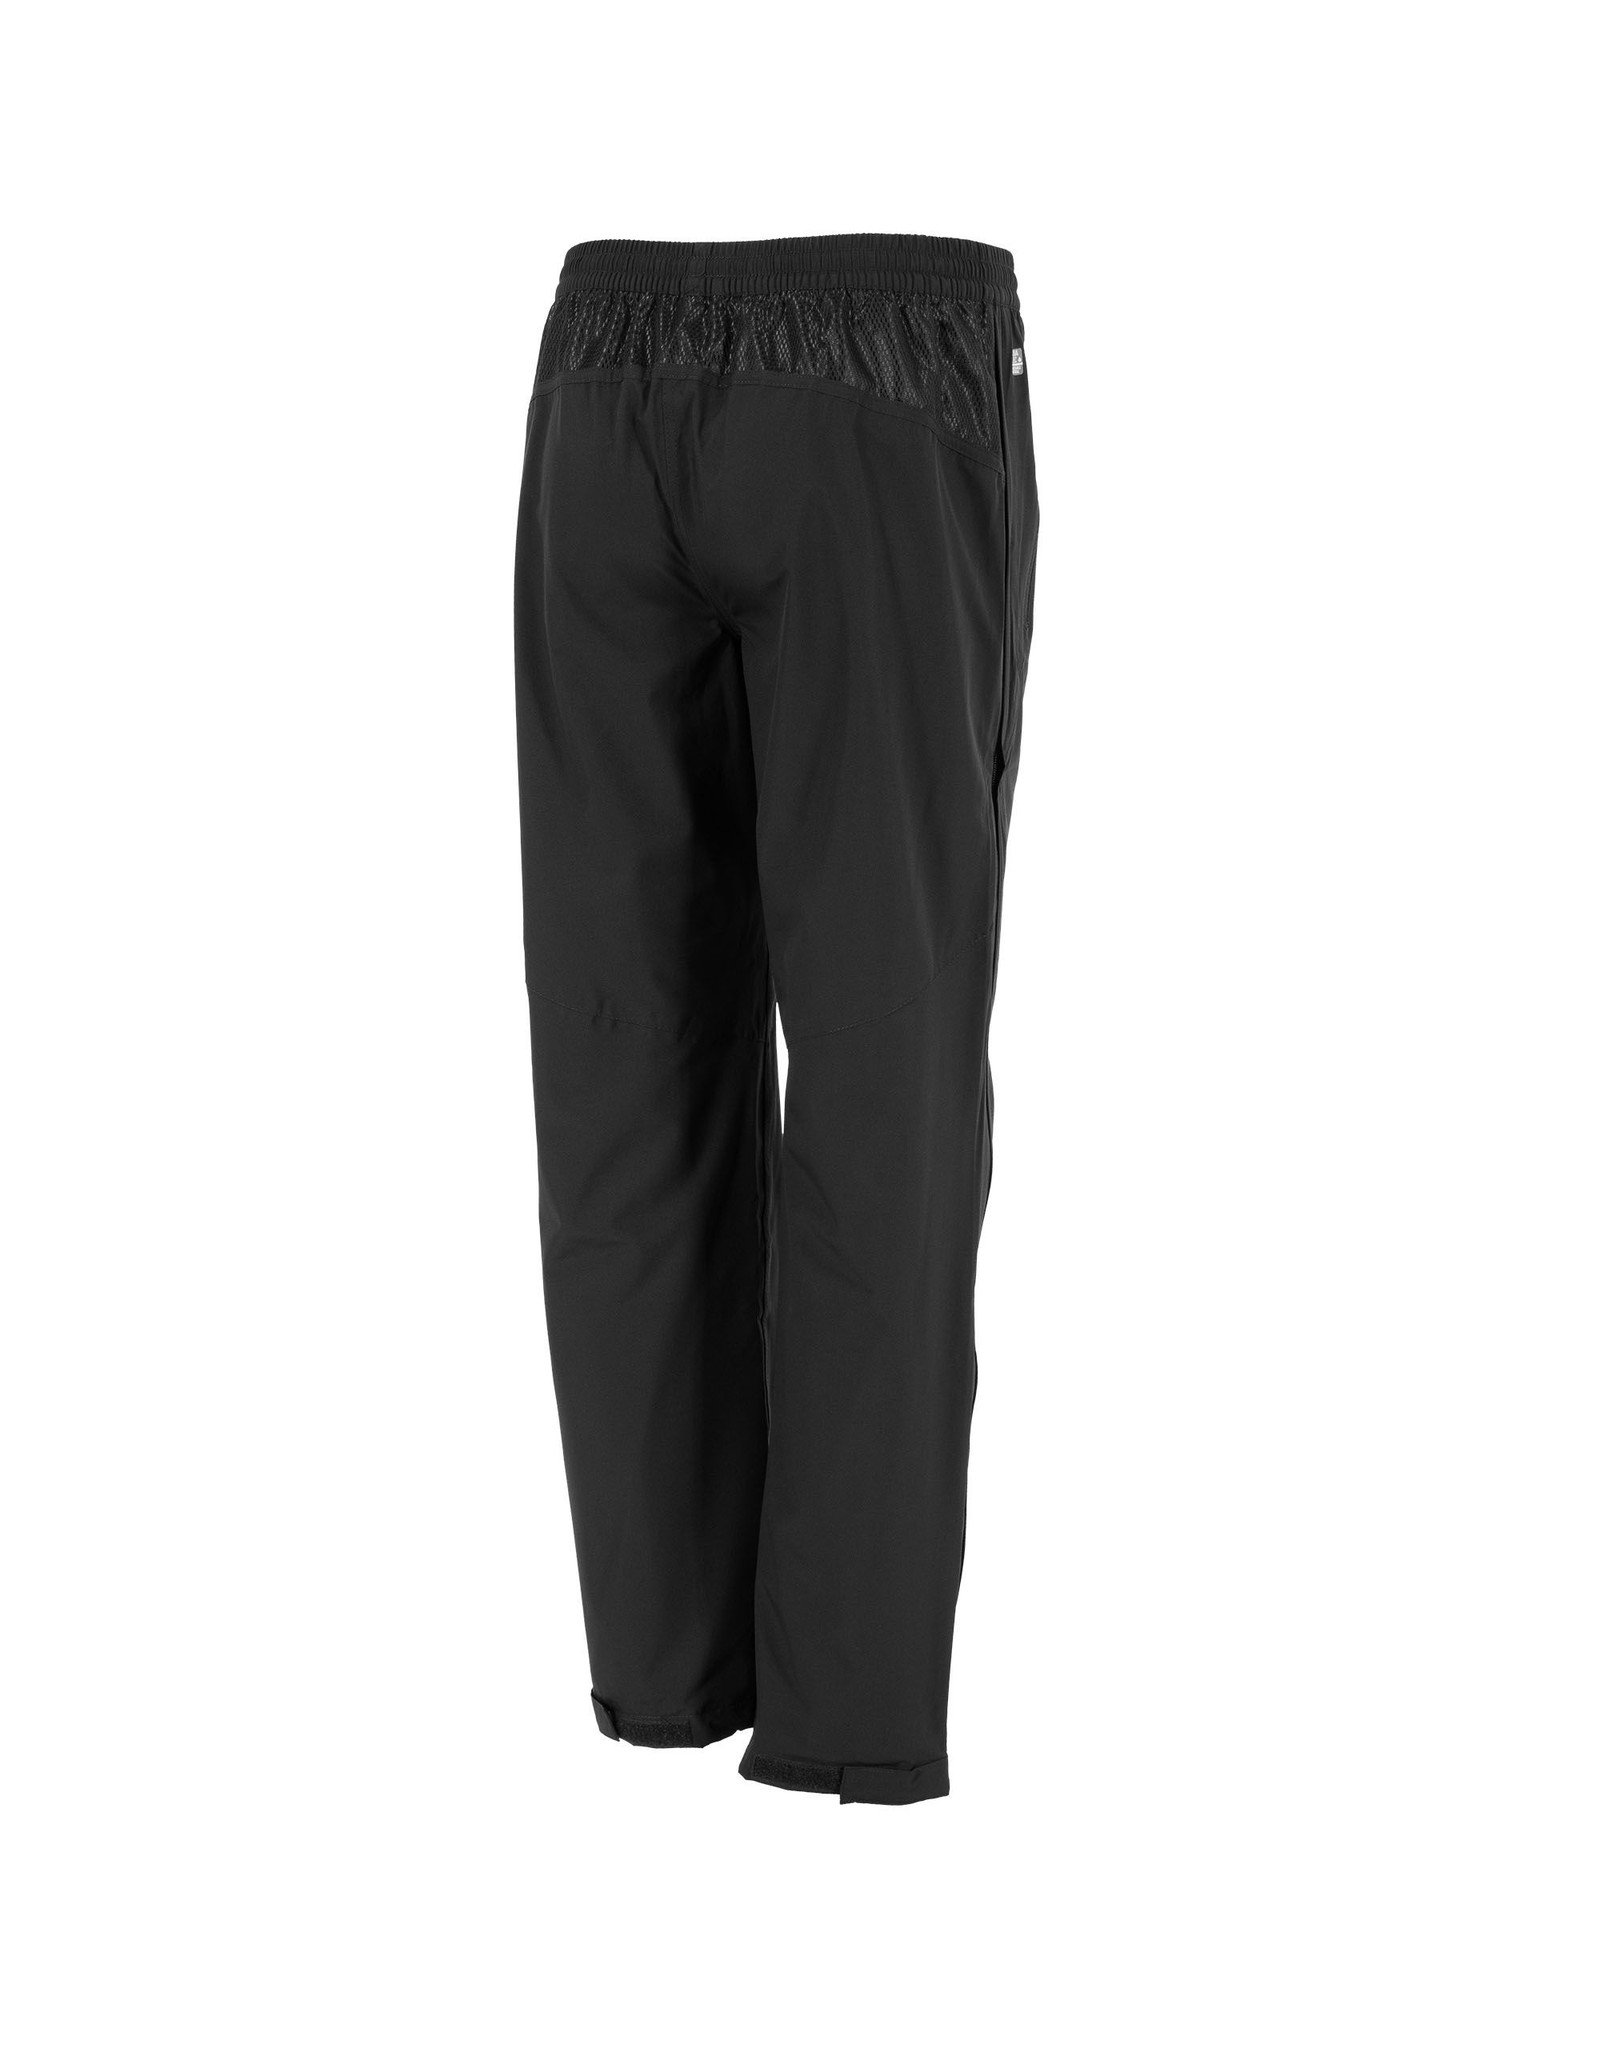 Reece Australia Cleve Breathable Pants-Black